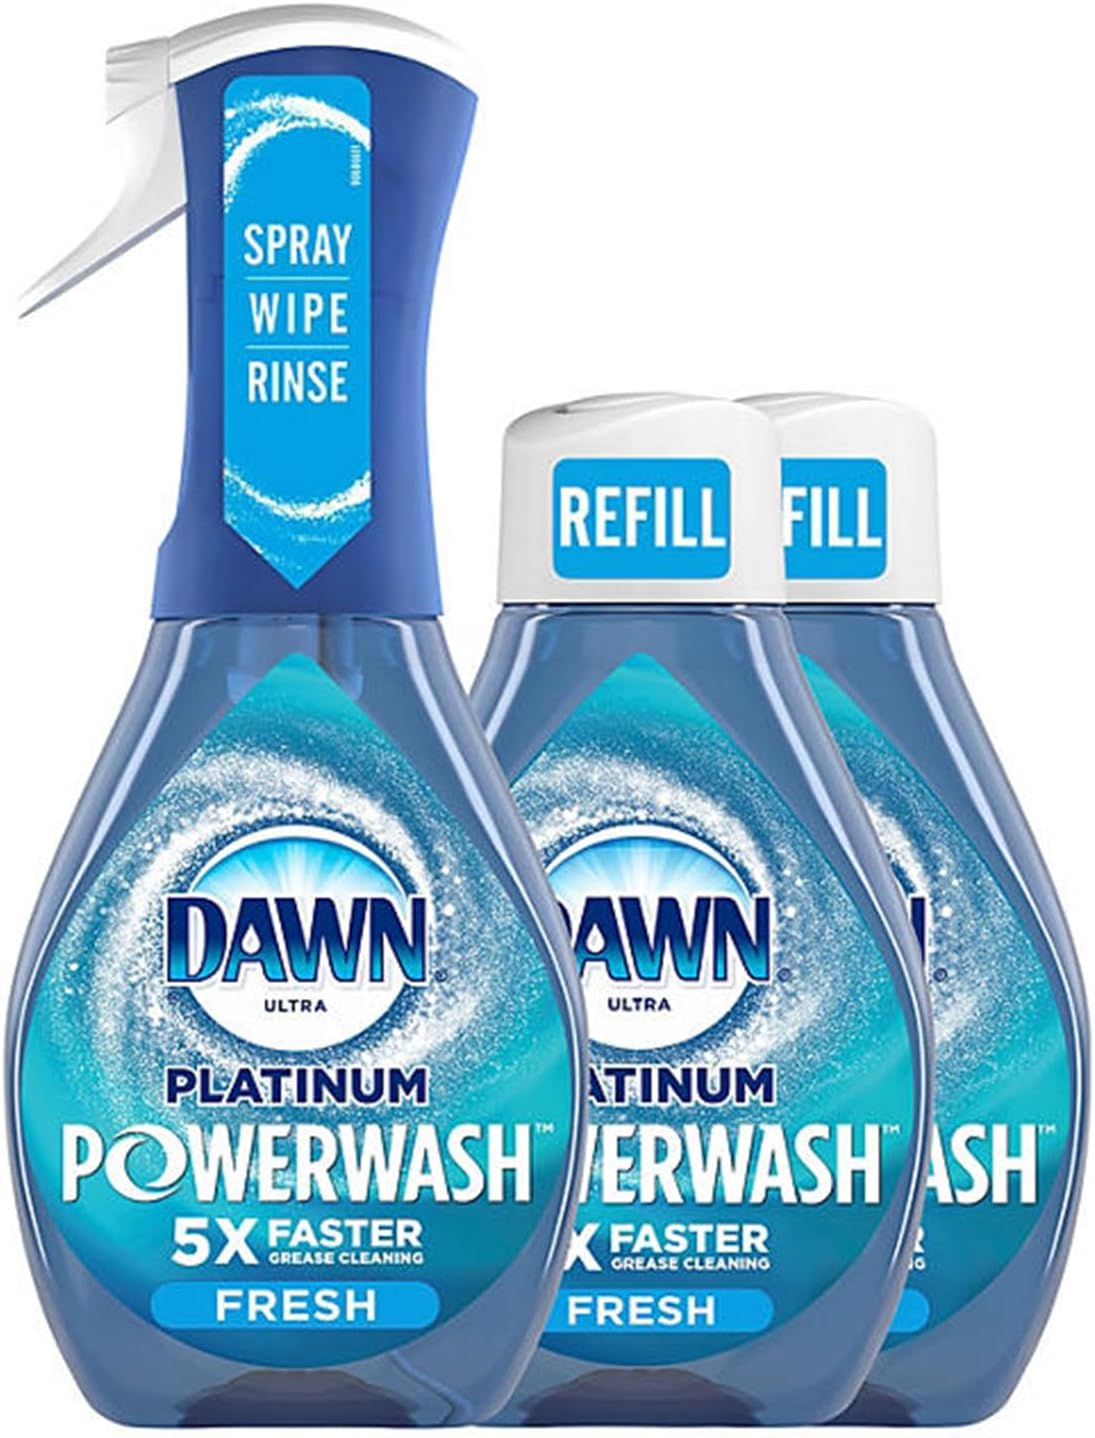 Dawn Platinum Powerwash Dish Spray & Dish Soap Refill Set, Fresh Scent 1 spray + 2 refills, Packaged The Perfect Dish Cleaner